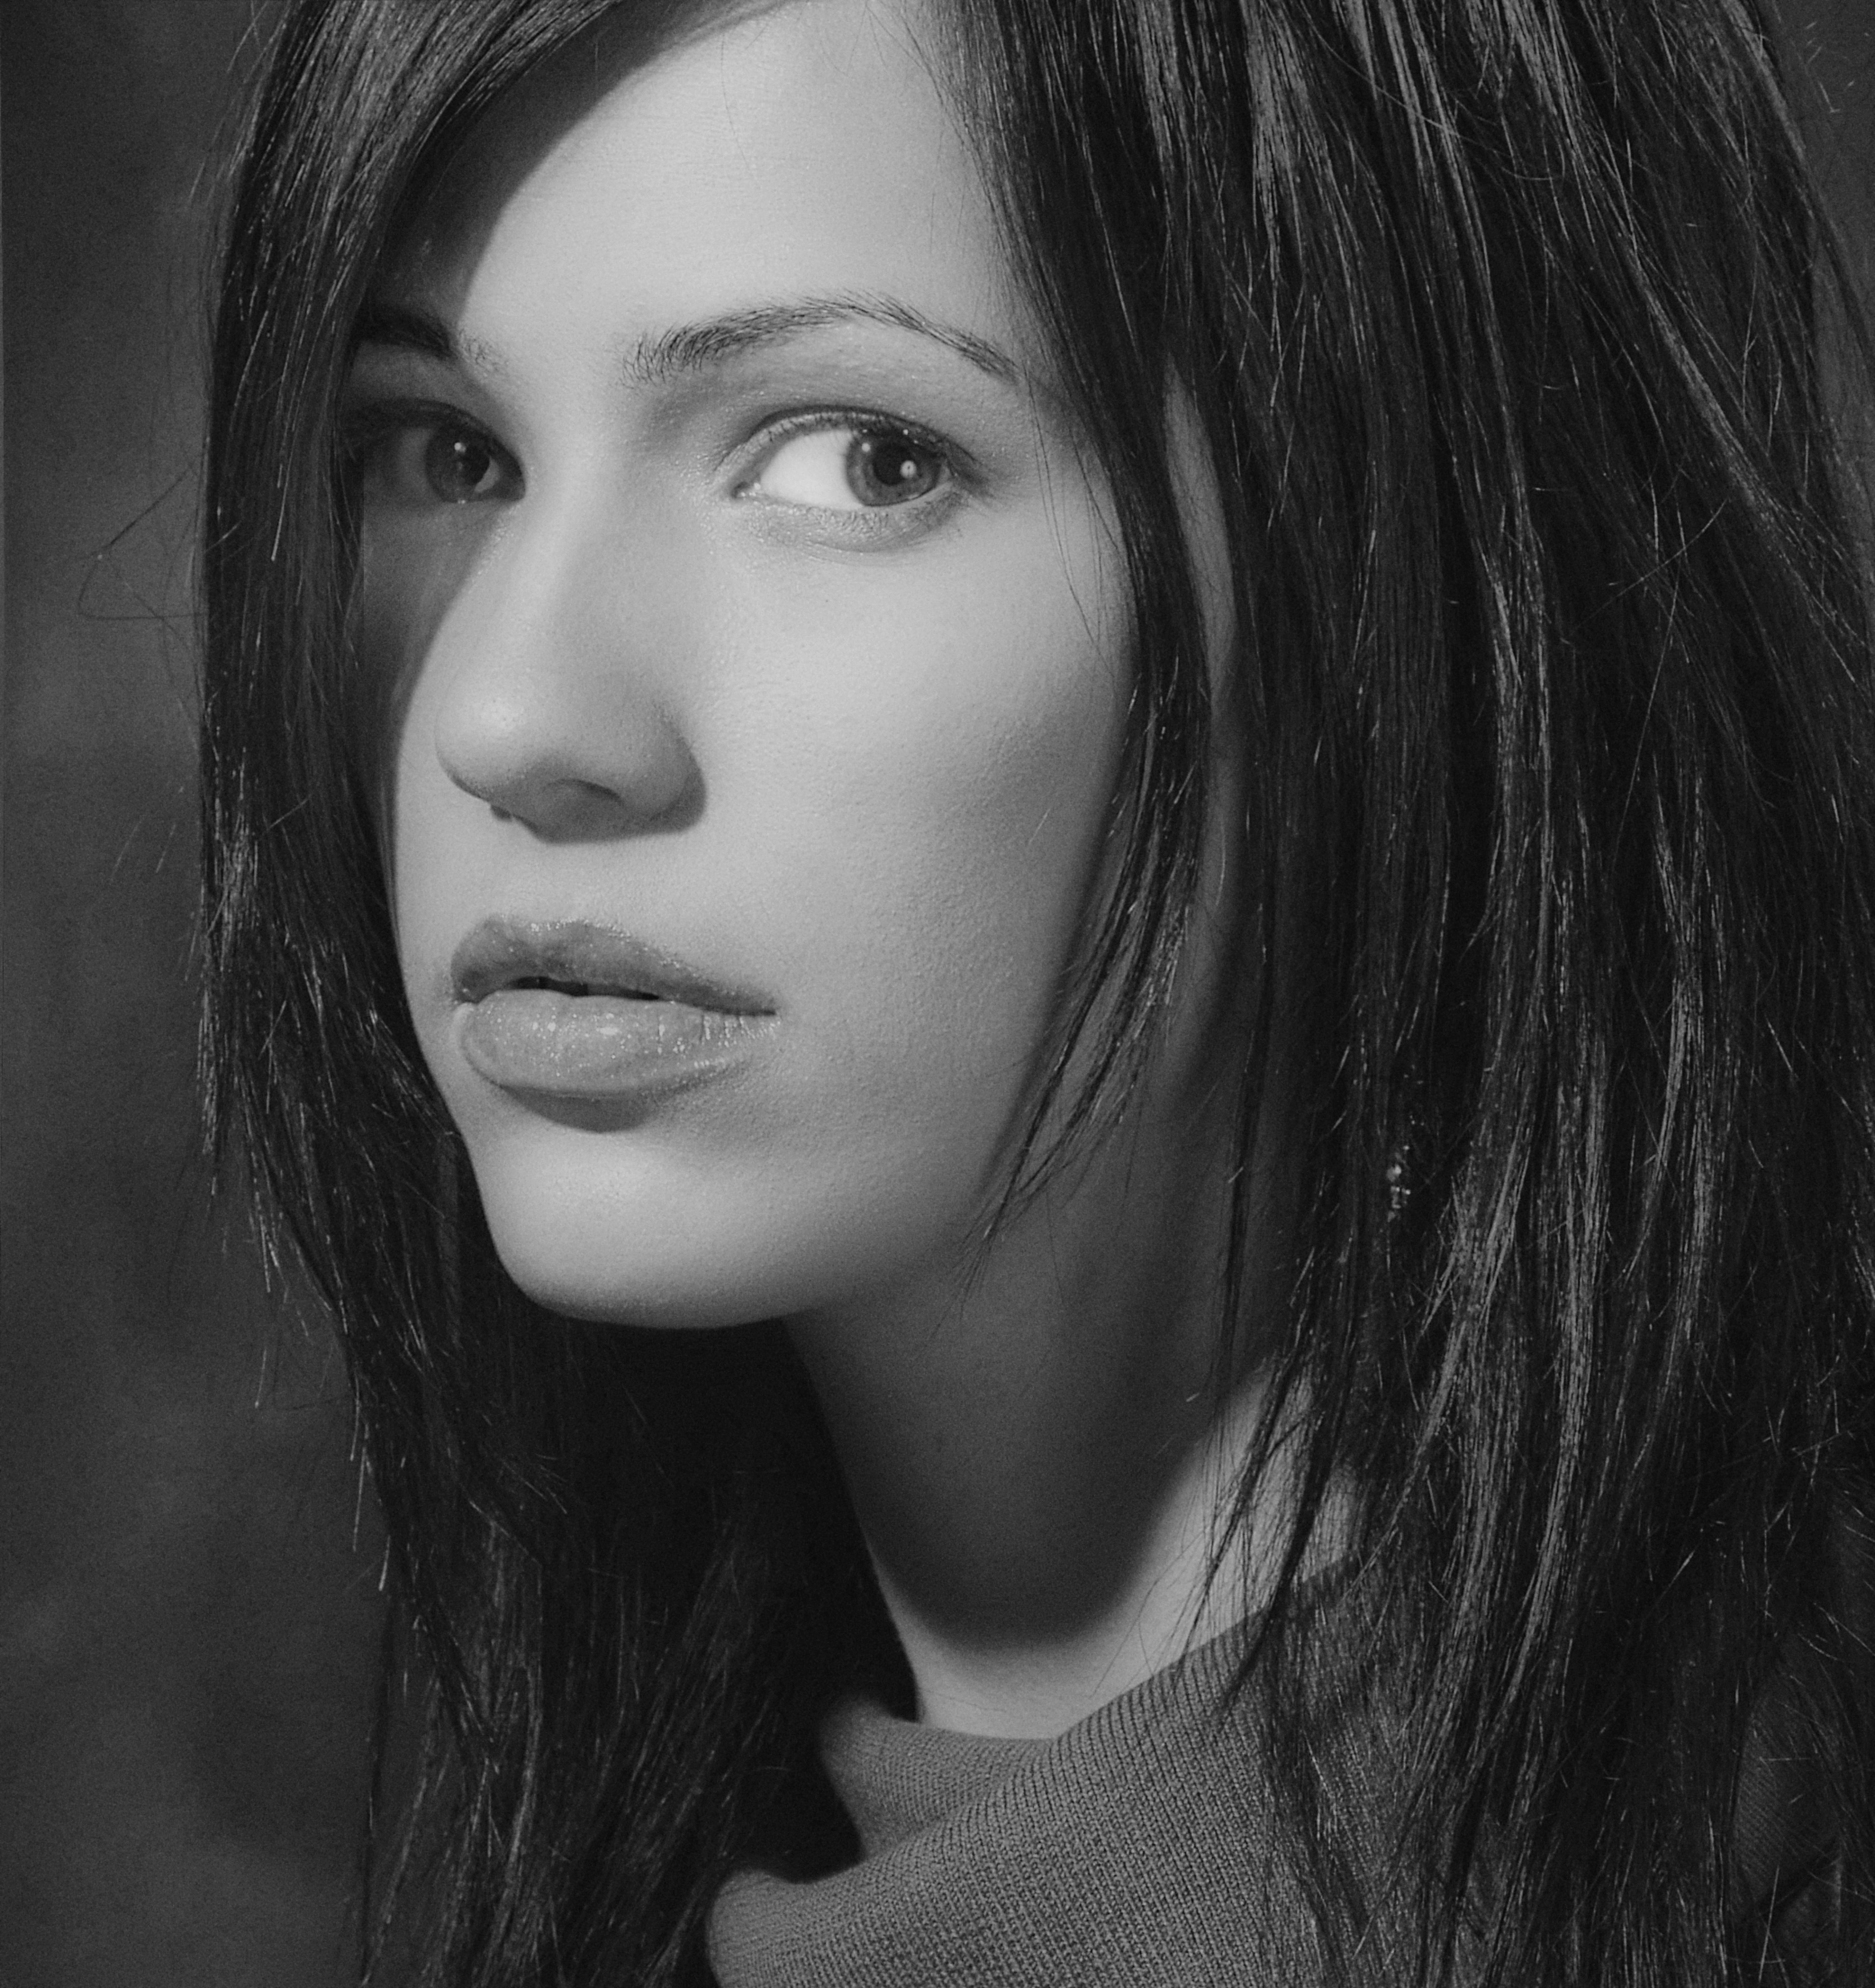 Profile of a Beautiful Girl - Free Stock Photo by Alexander Krivitskiy on